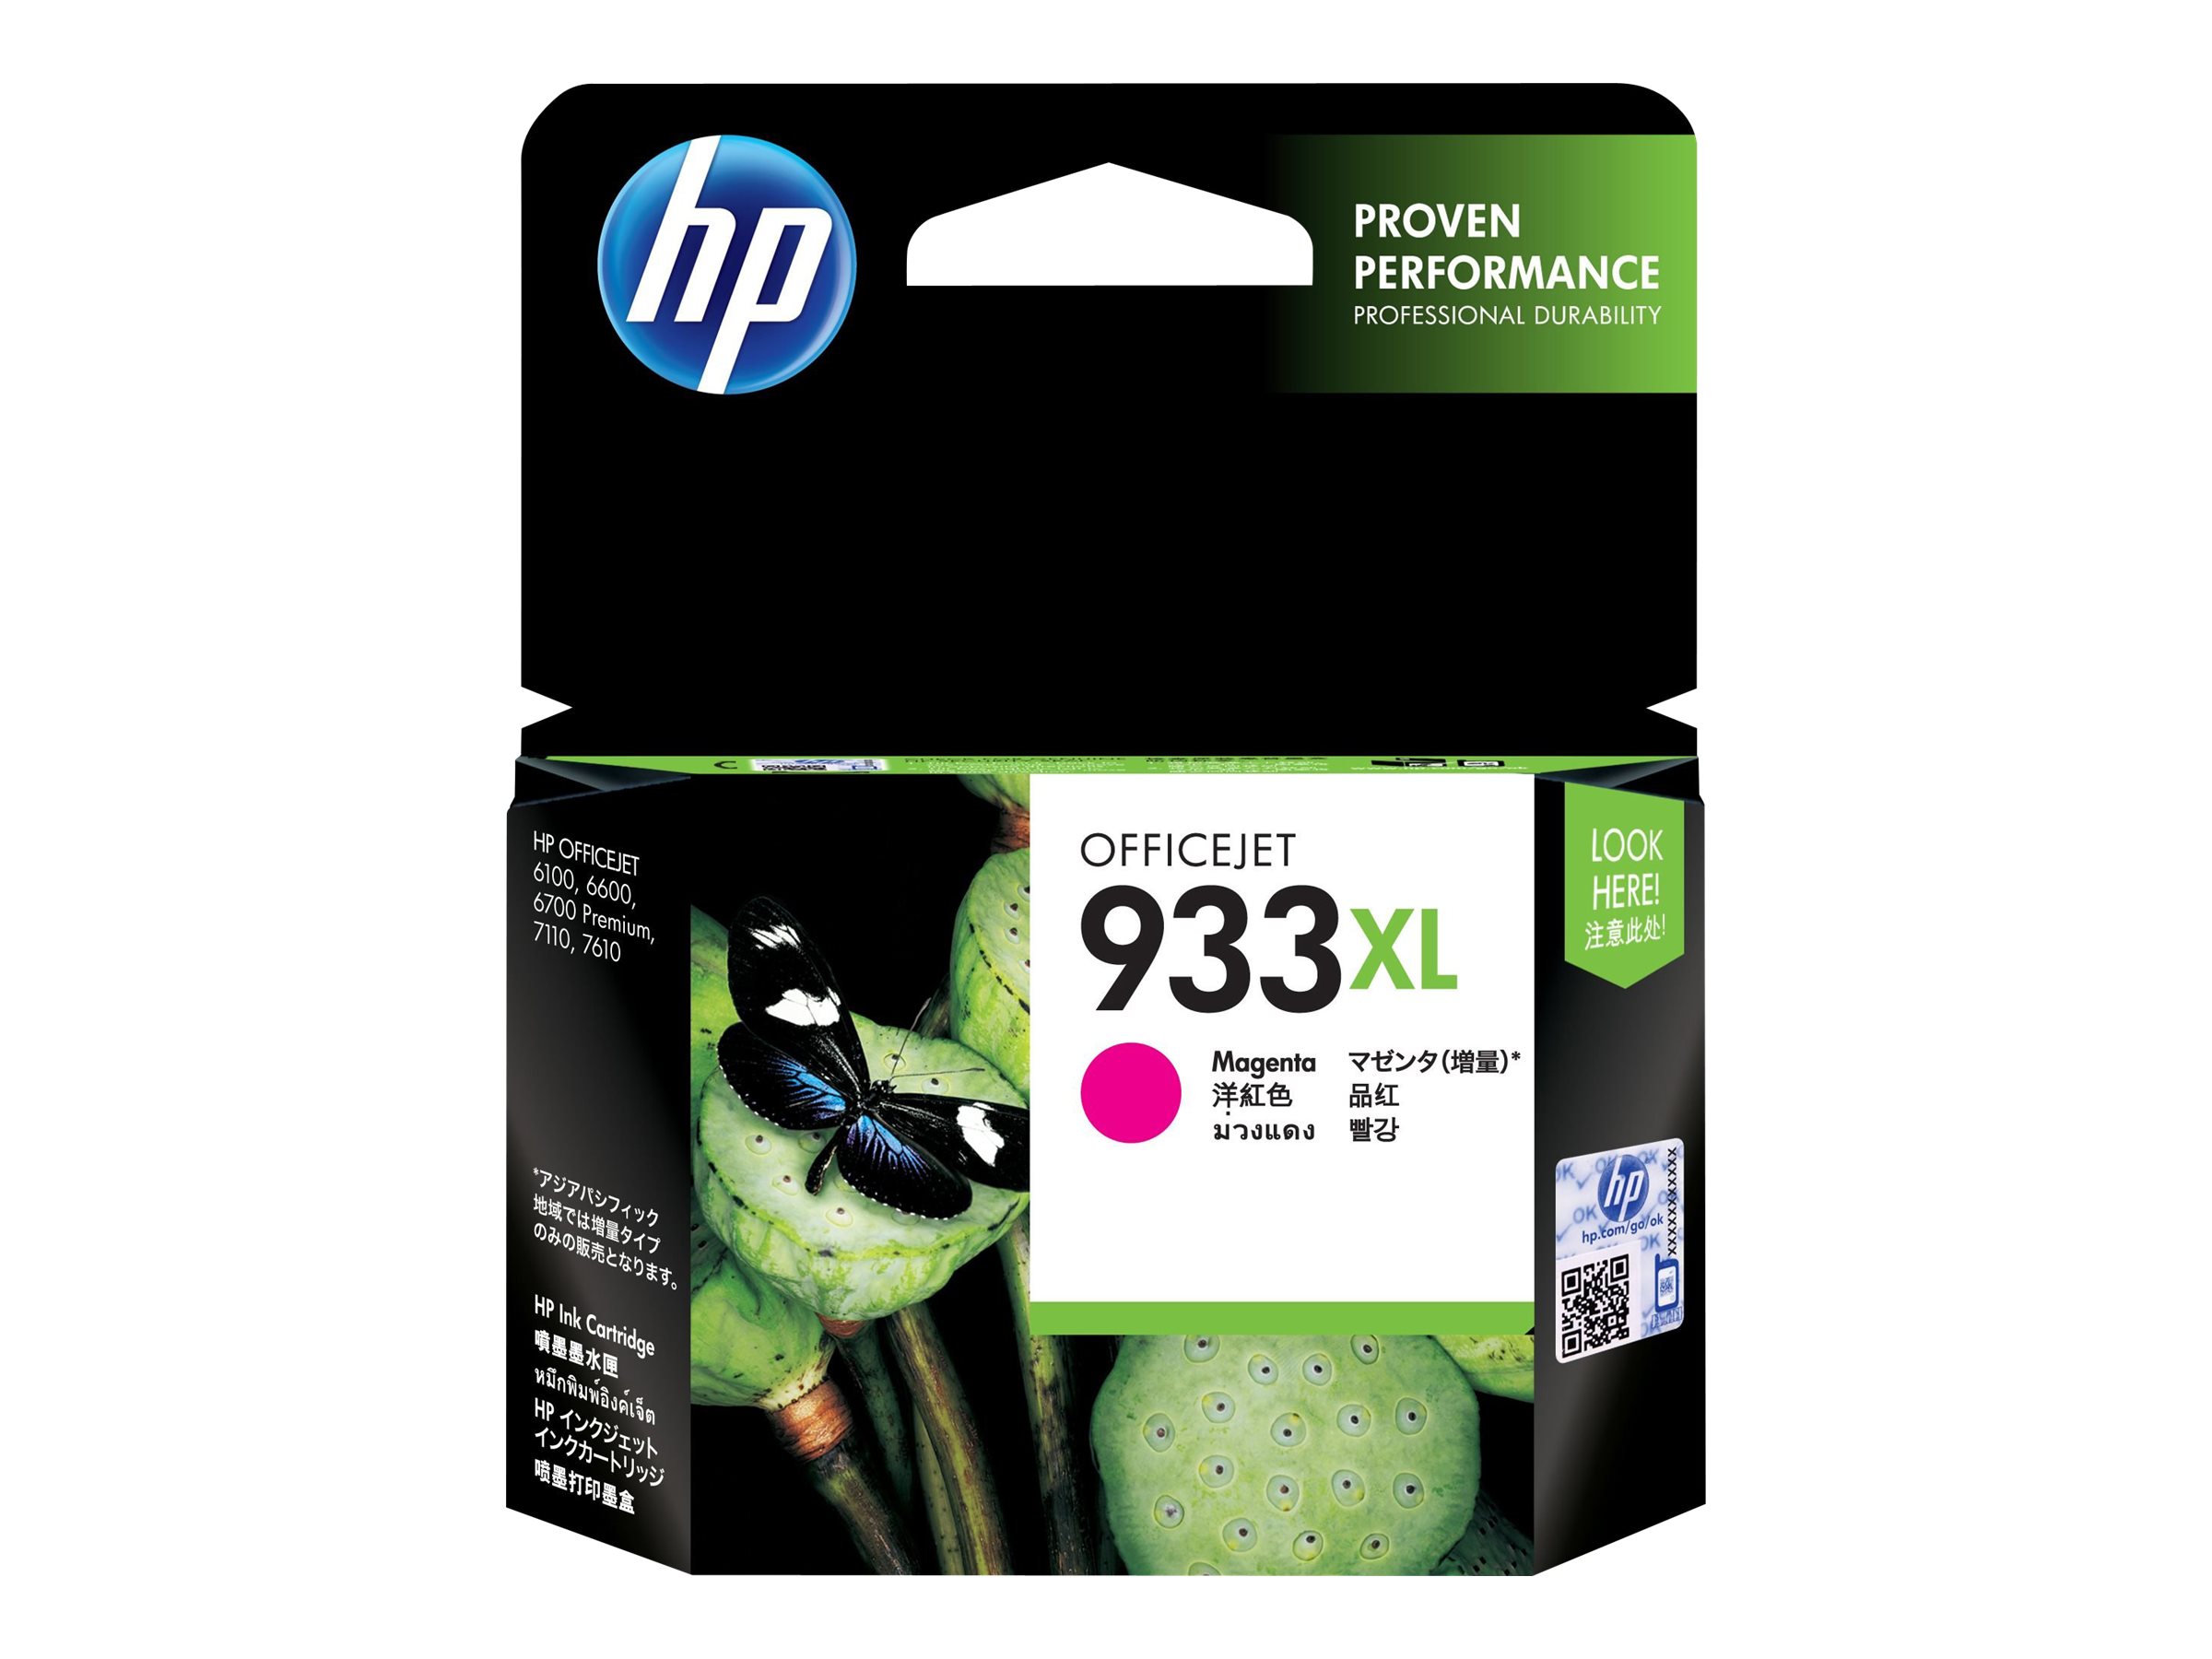 HP 933XL - 8.5 ml - Alto rendimiento - magenta - original - cartucho de tinta - para Officejet 6100, 6600 H711a, 6700, 7110, 7510, 7610, 7612